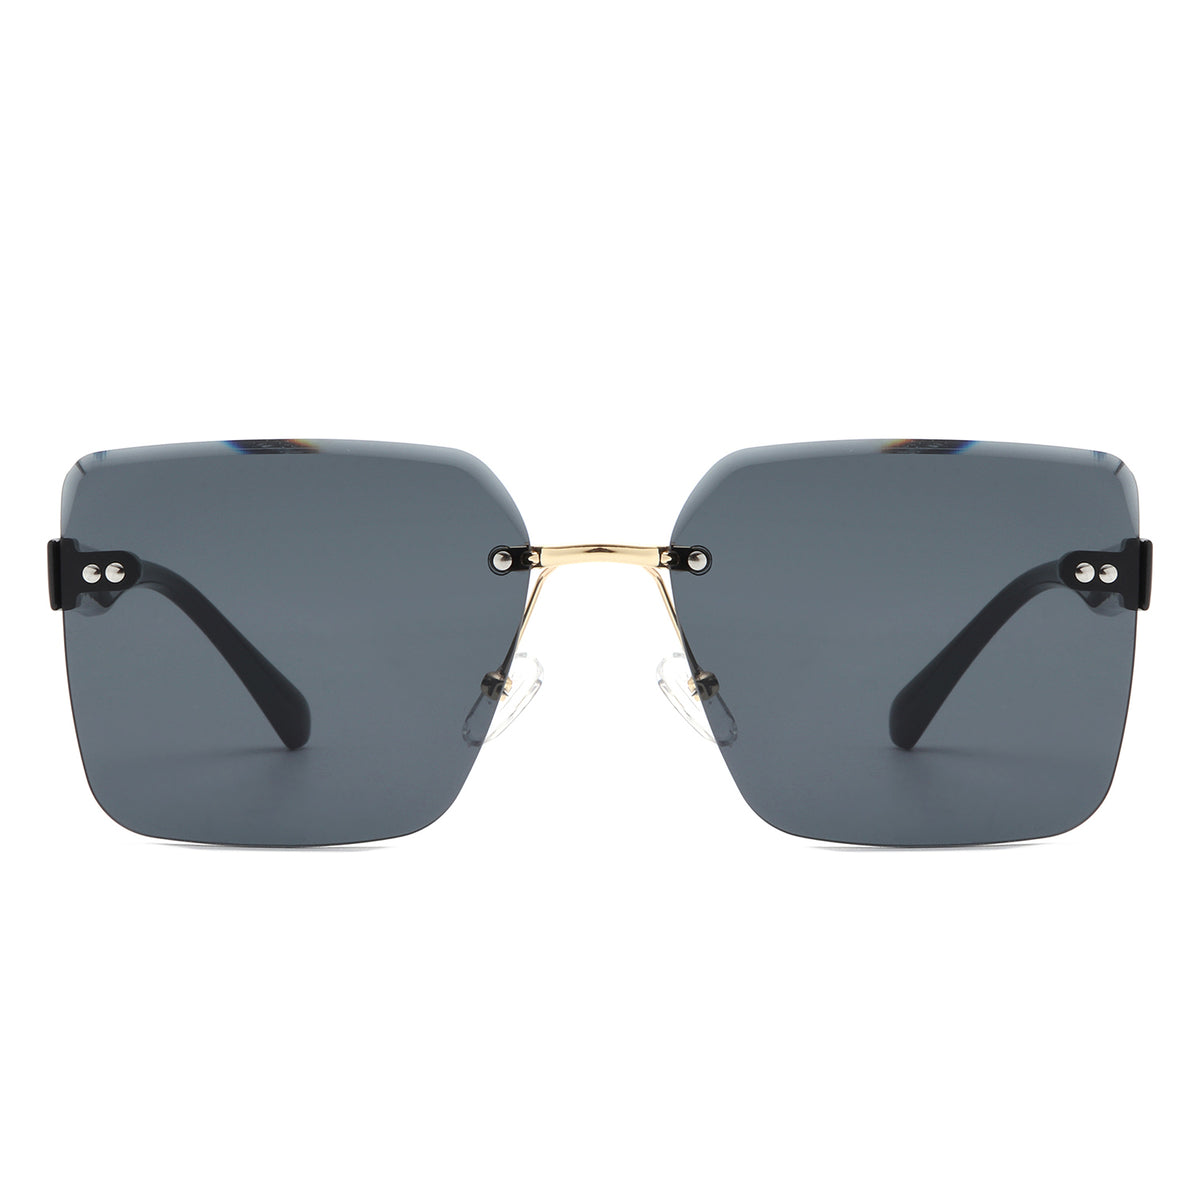 HW2054 - Square Rimless Fashion Tinted Women Wholesale Sunglasses